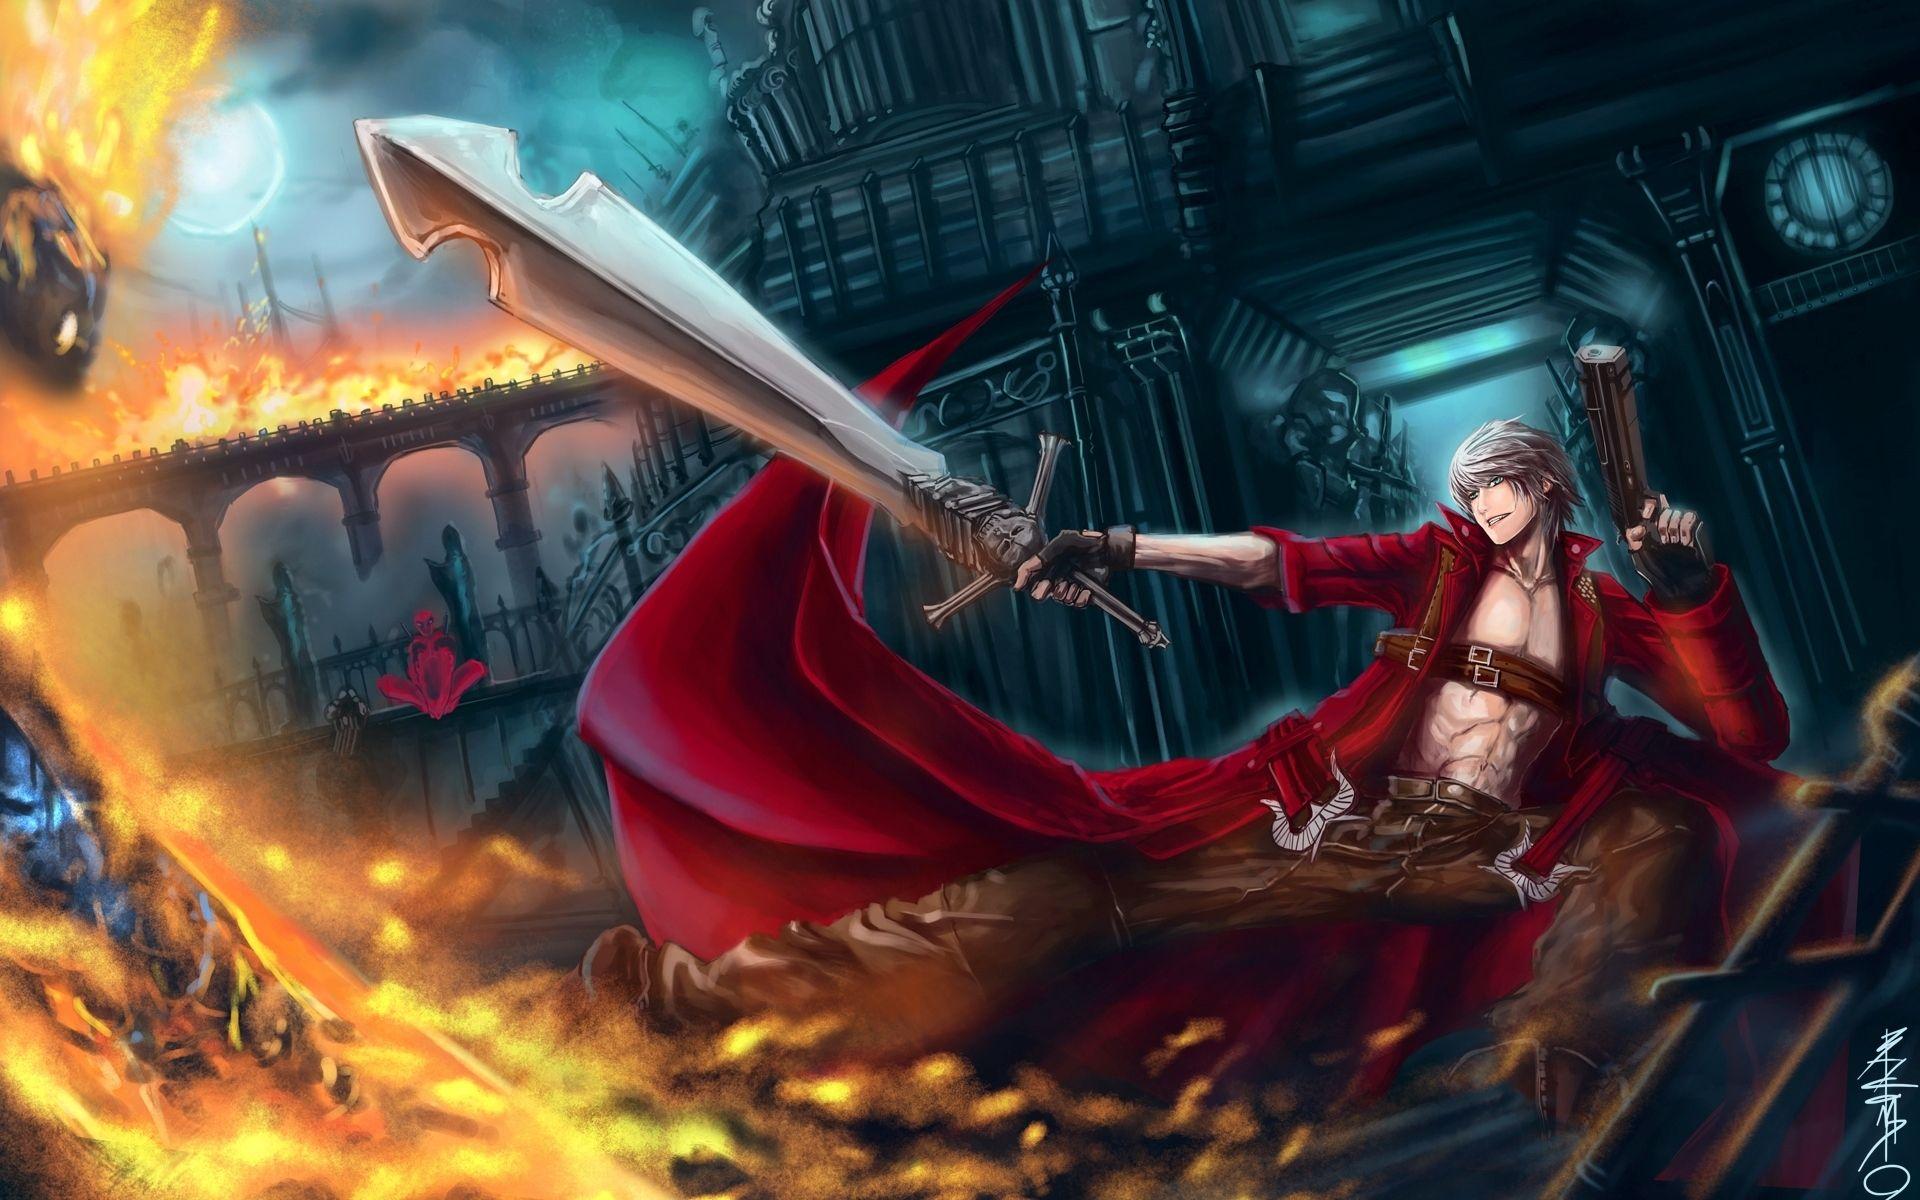 Devil may cry 3 DMC 3 fantasy warrior magic fire sword weapon